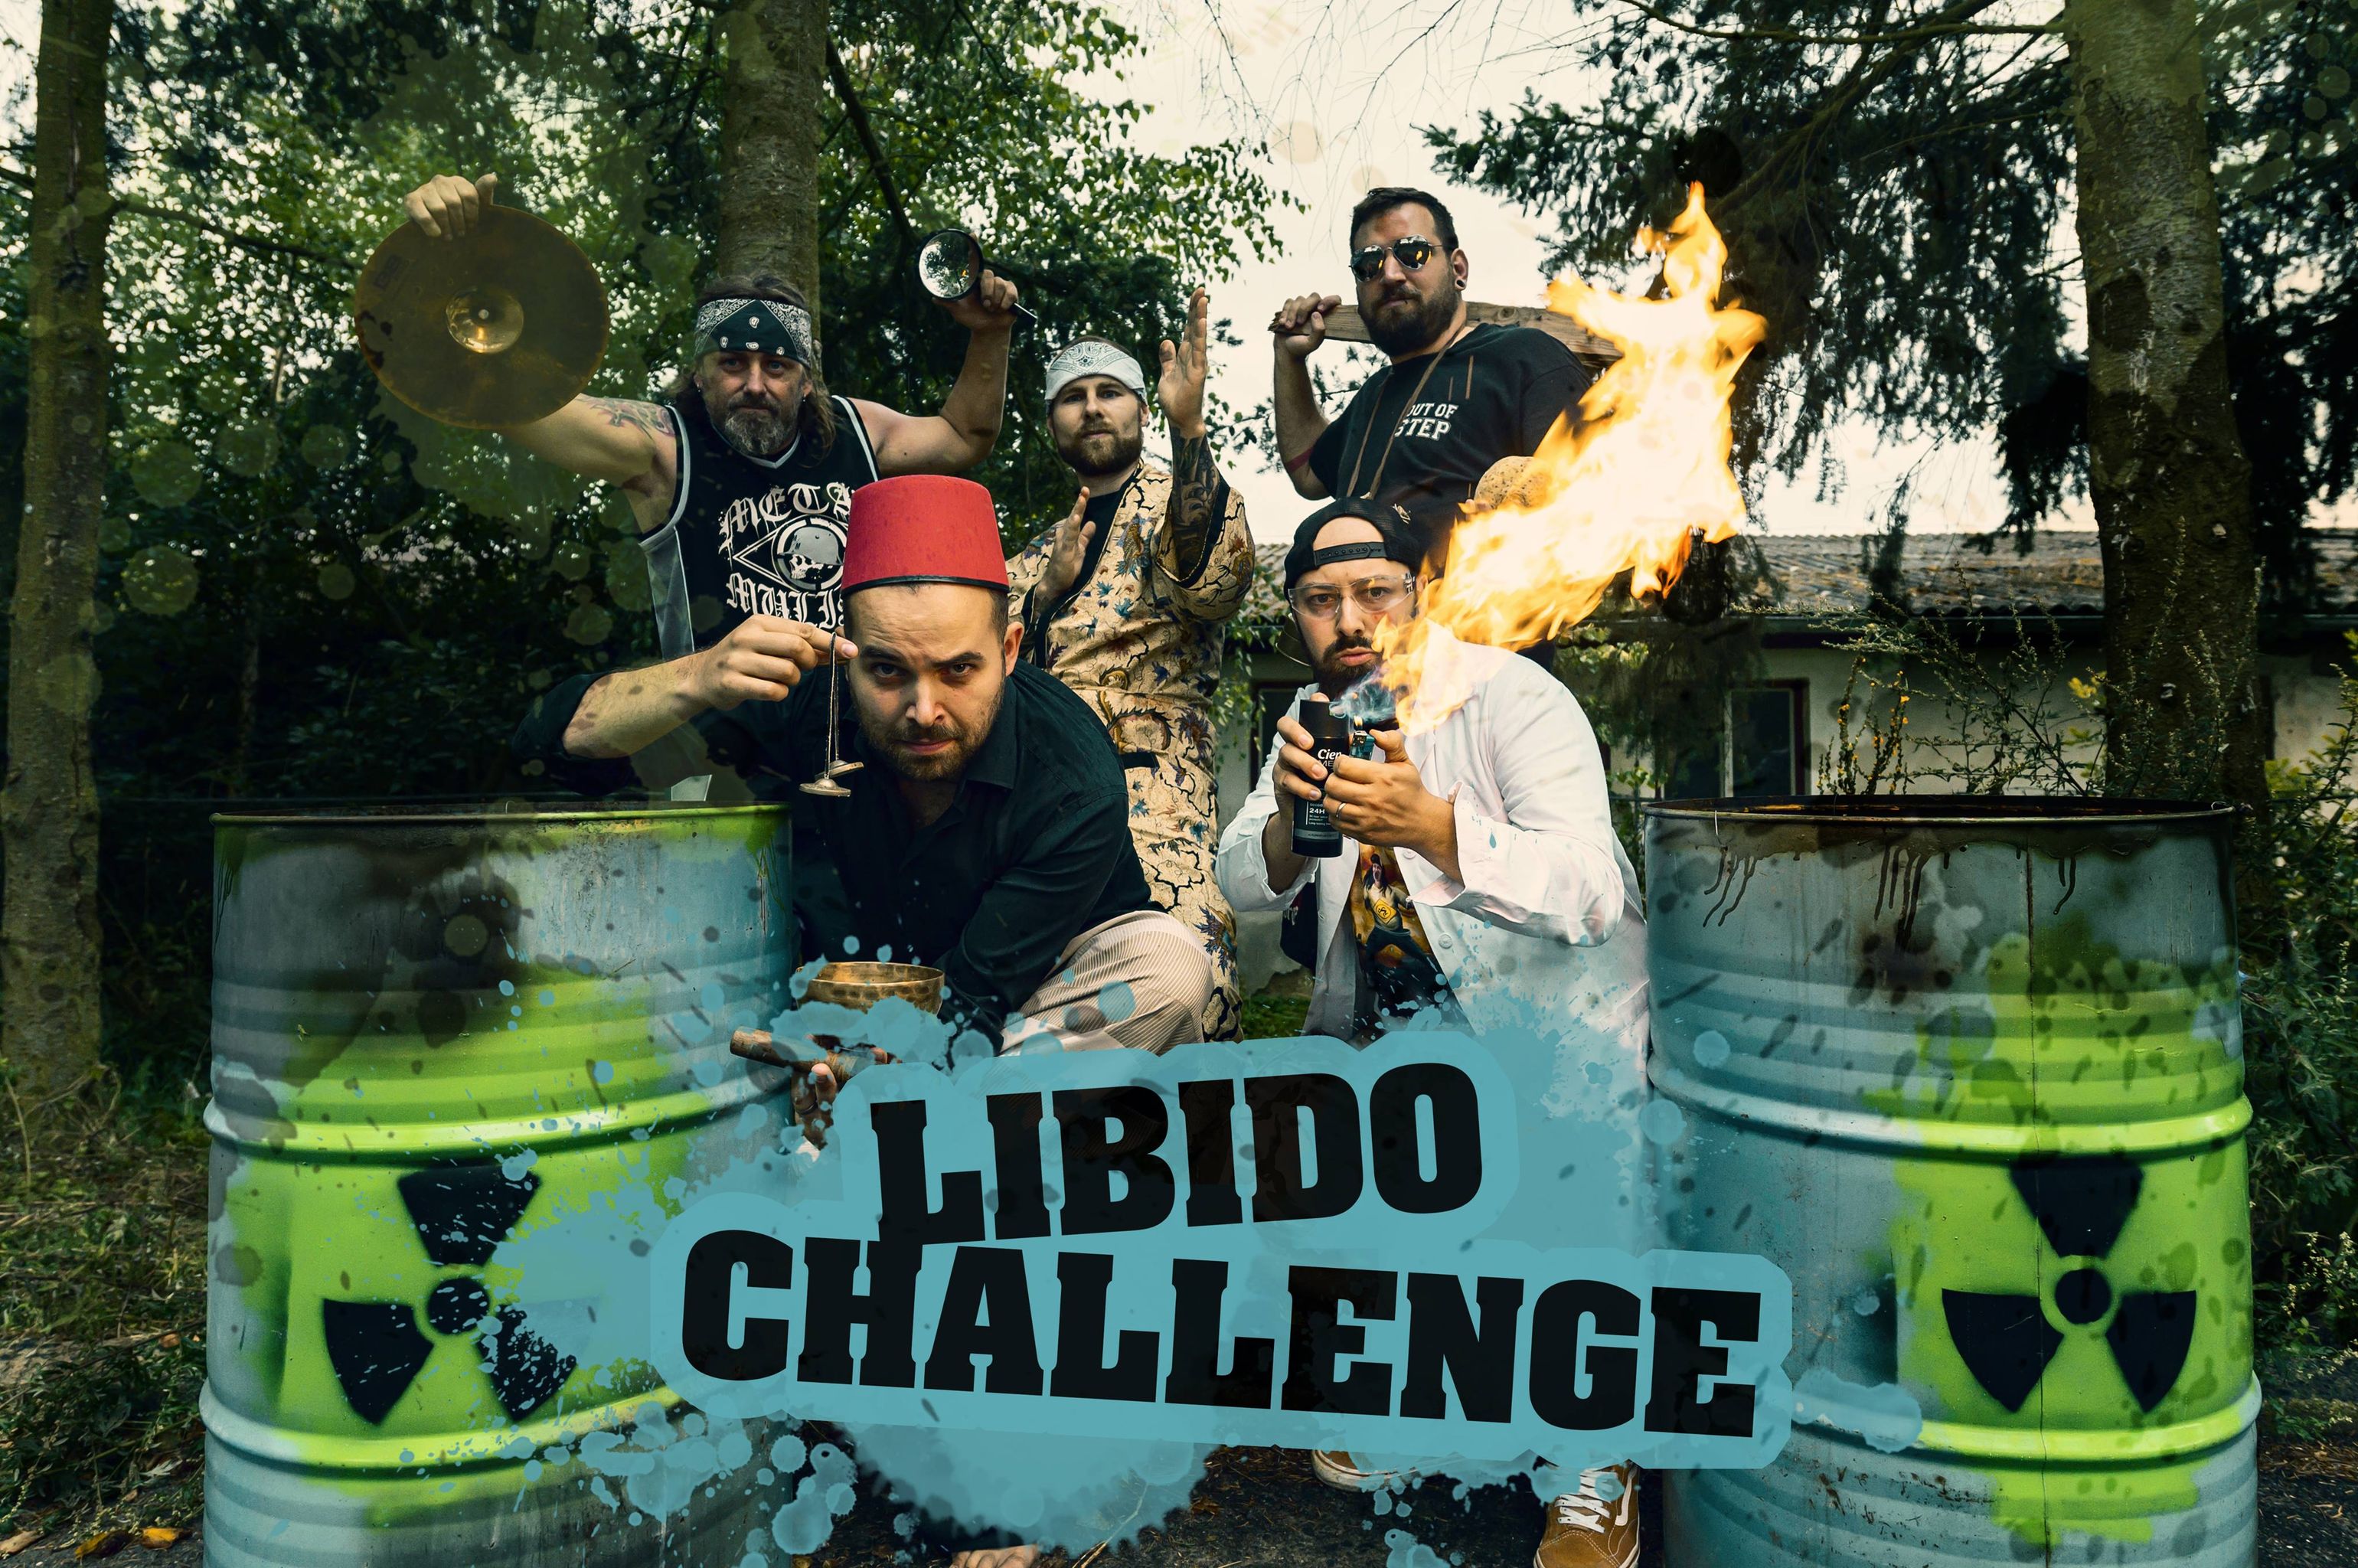 fotka Libido Challenge číslo 1.jpg